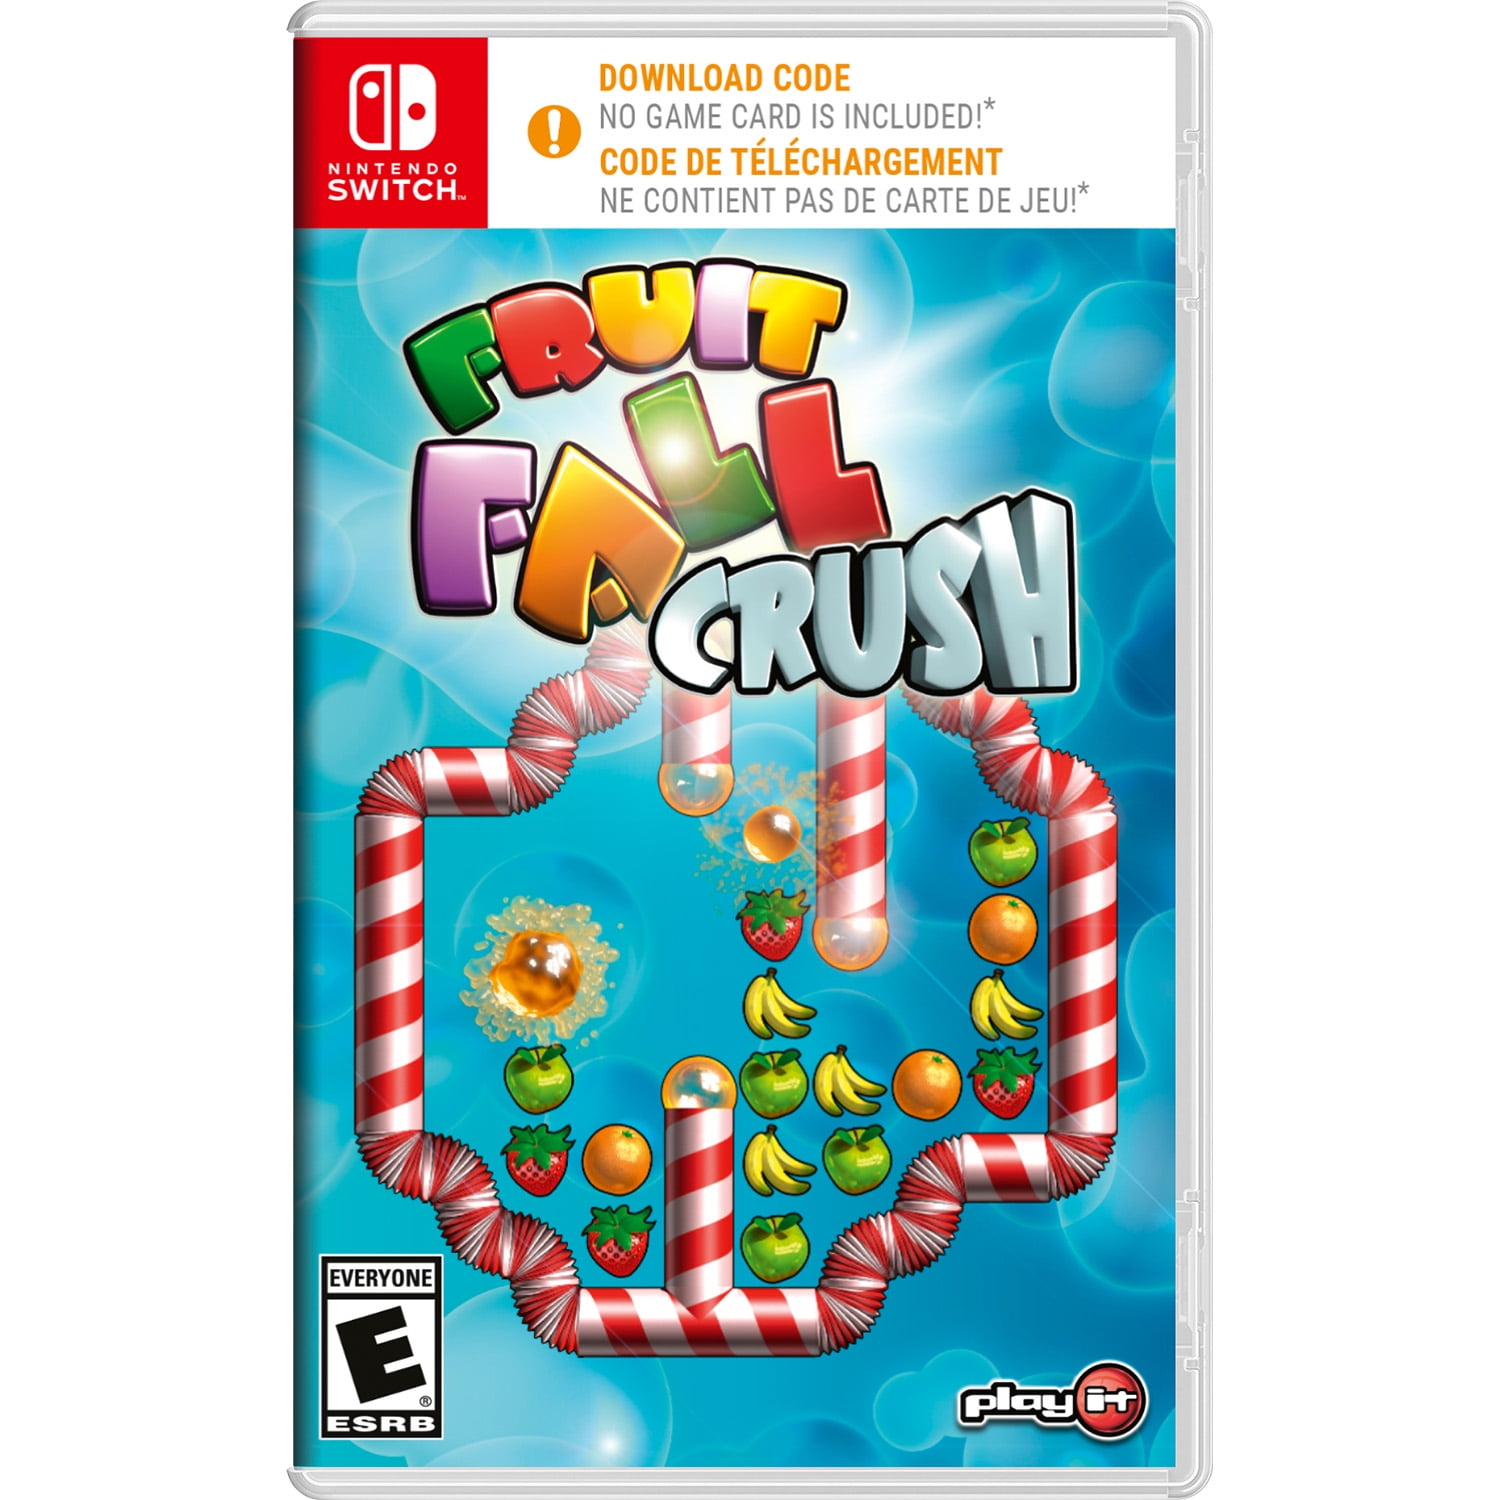 Fruit Fall Crush Play It Nintendo Switch 813598020158 Walmart